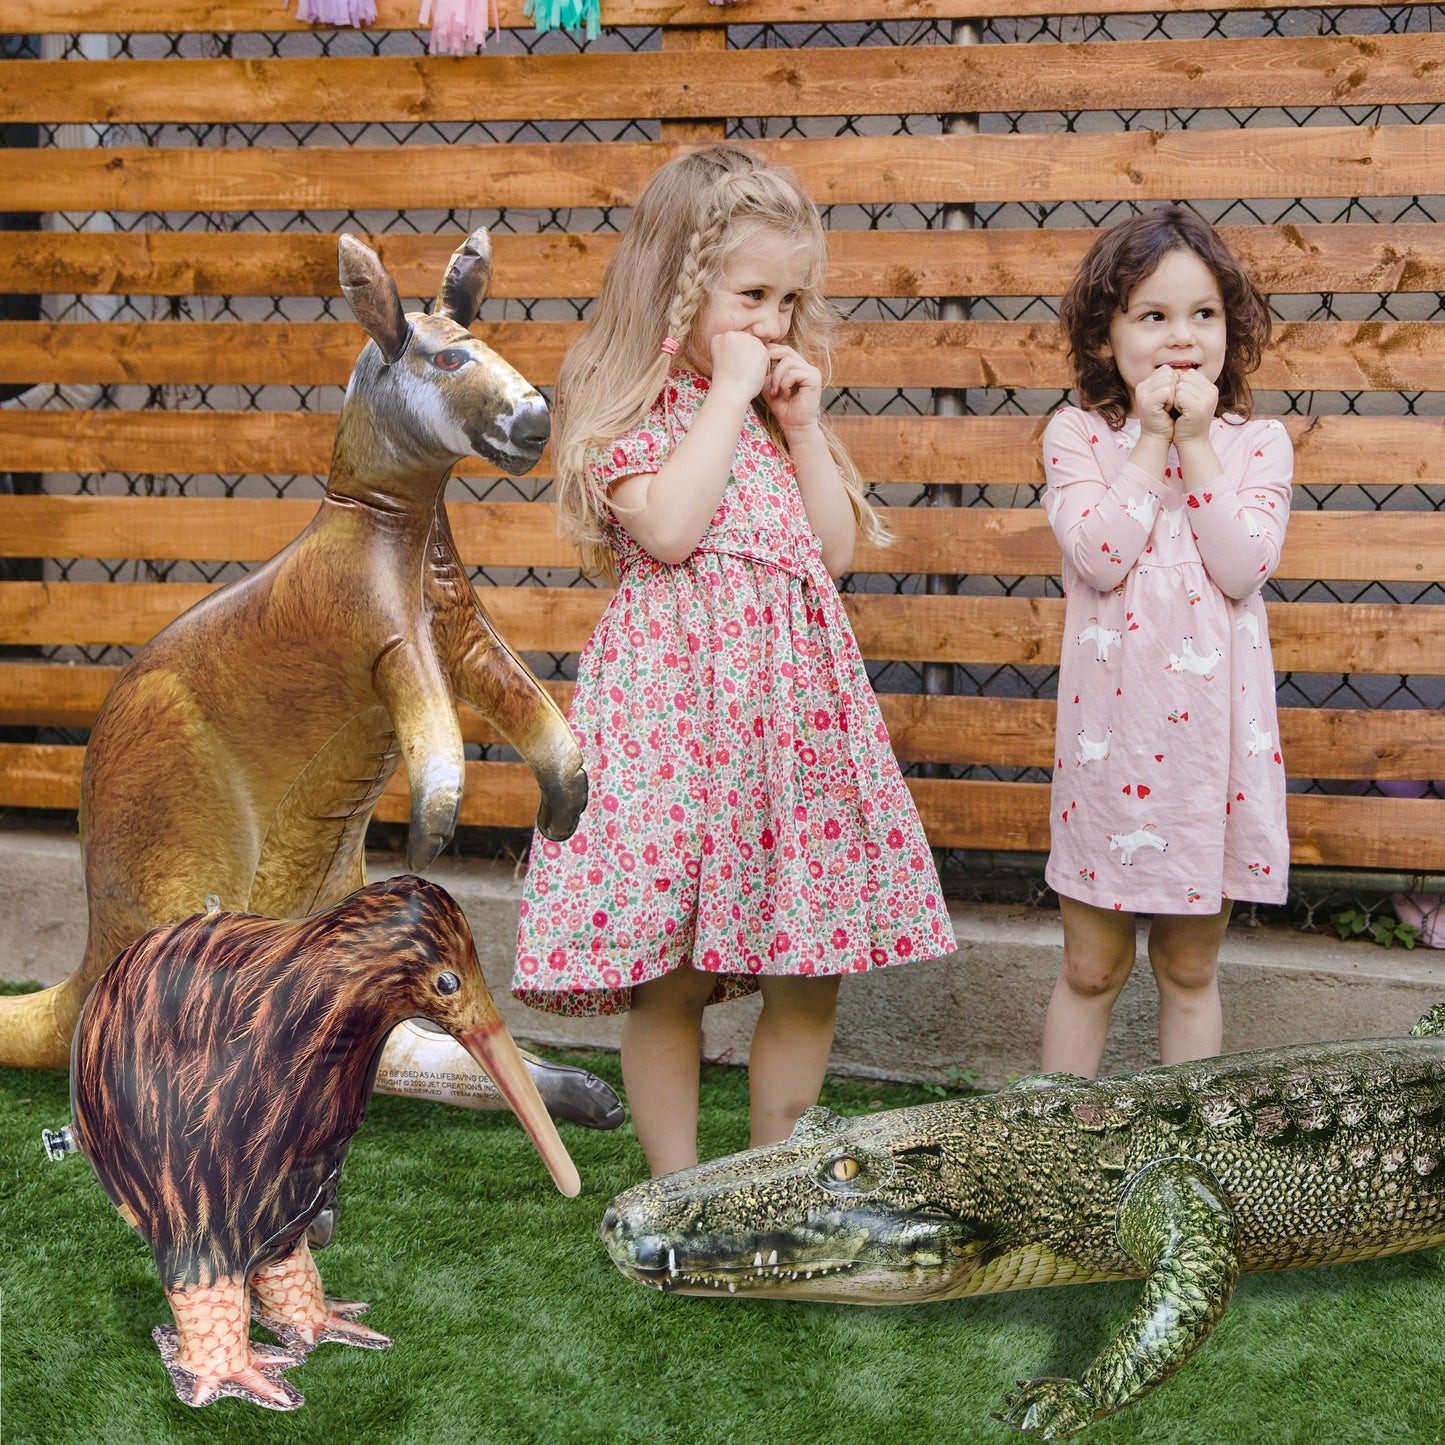 JC-KKG - Kangaroo, Kiwi bird, Alligator - Decor